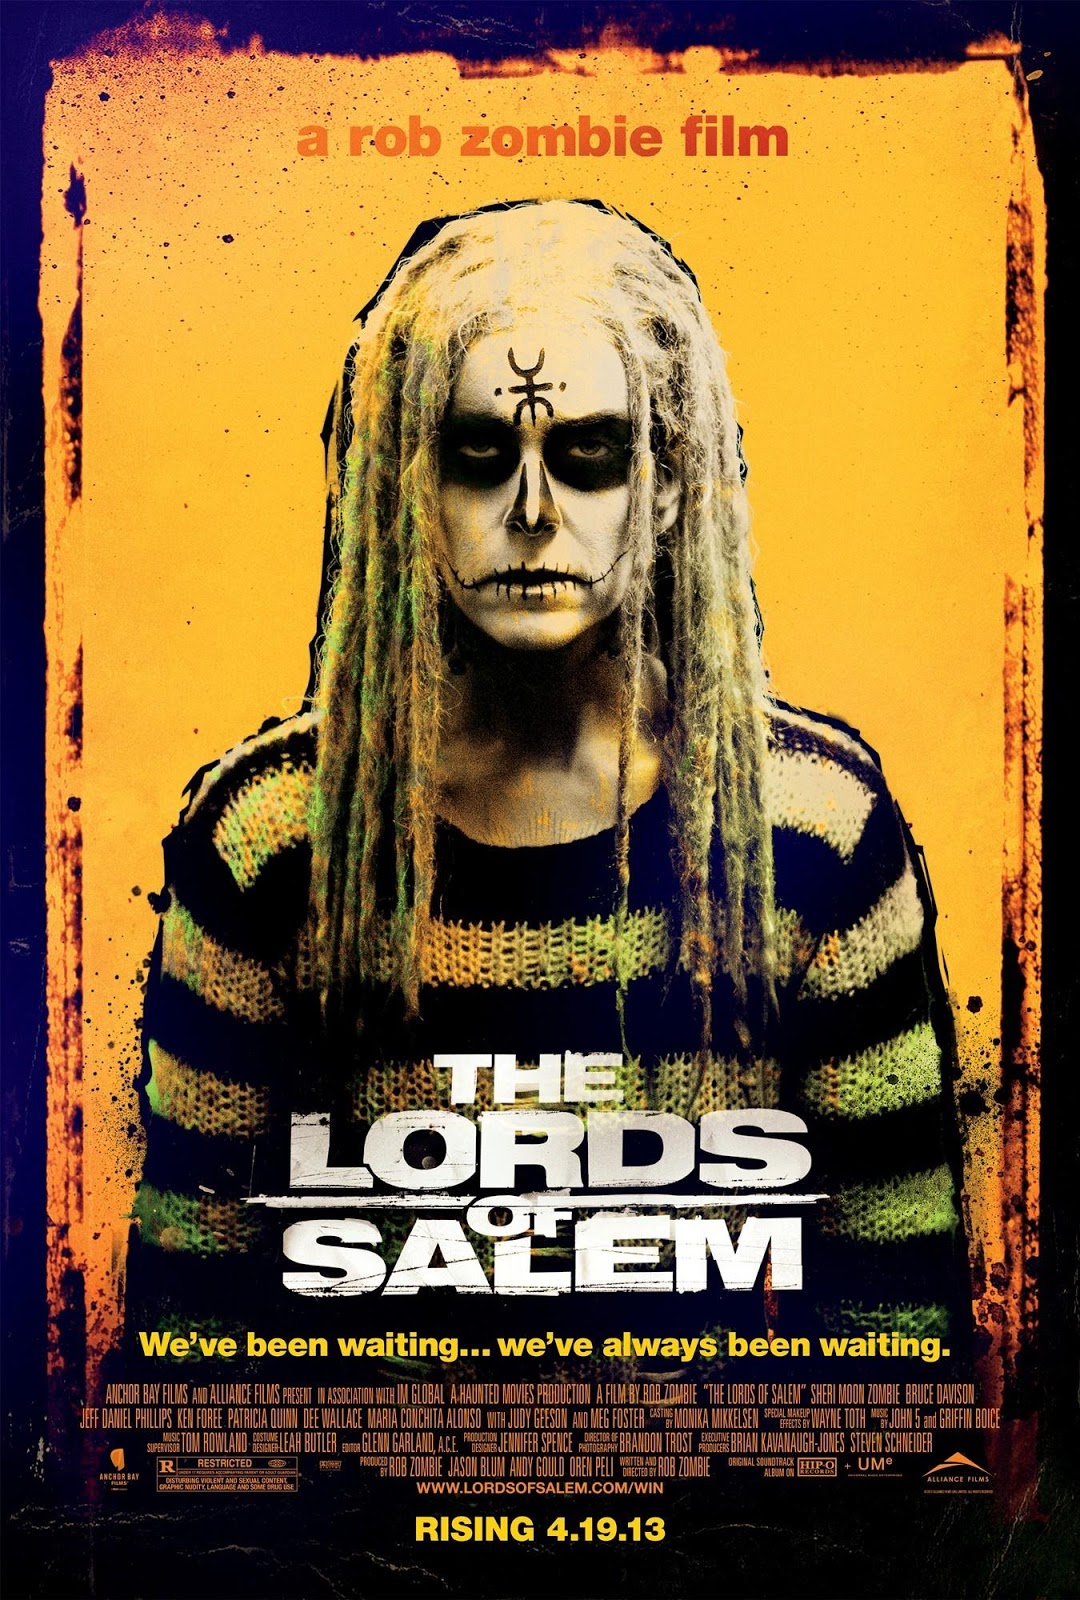 Rob Zombie Lords of Salem